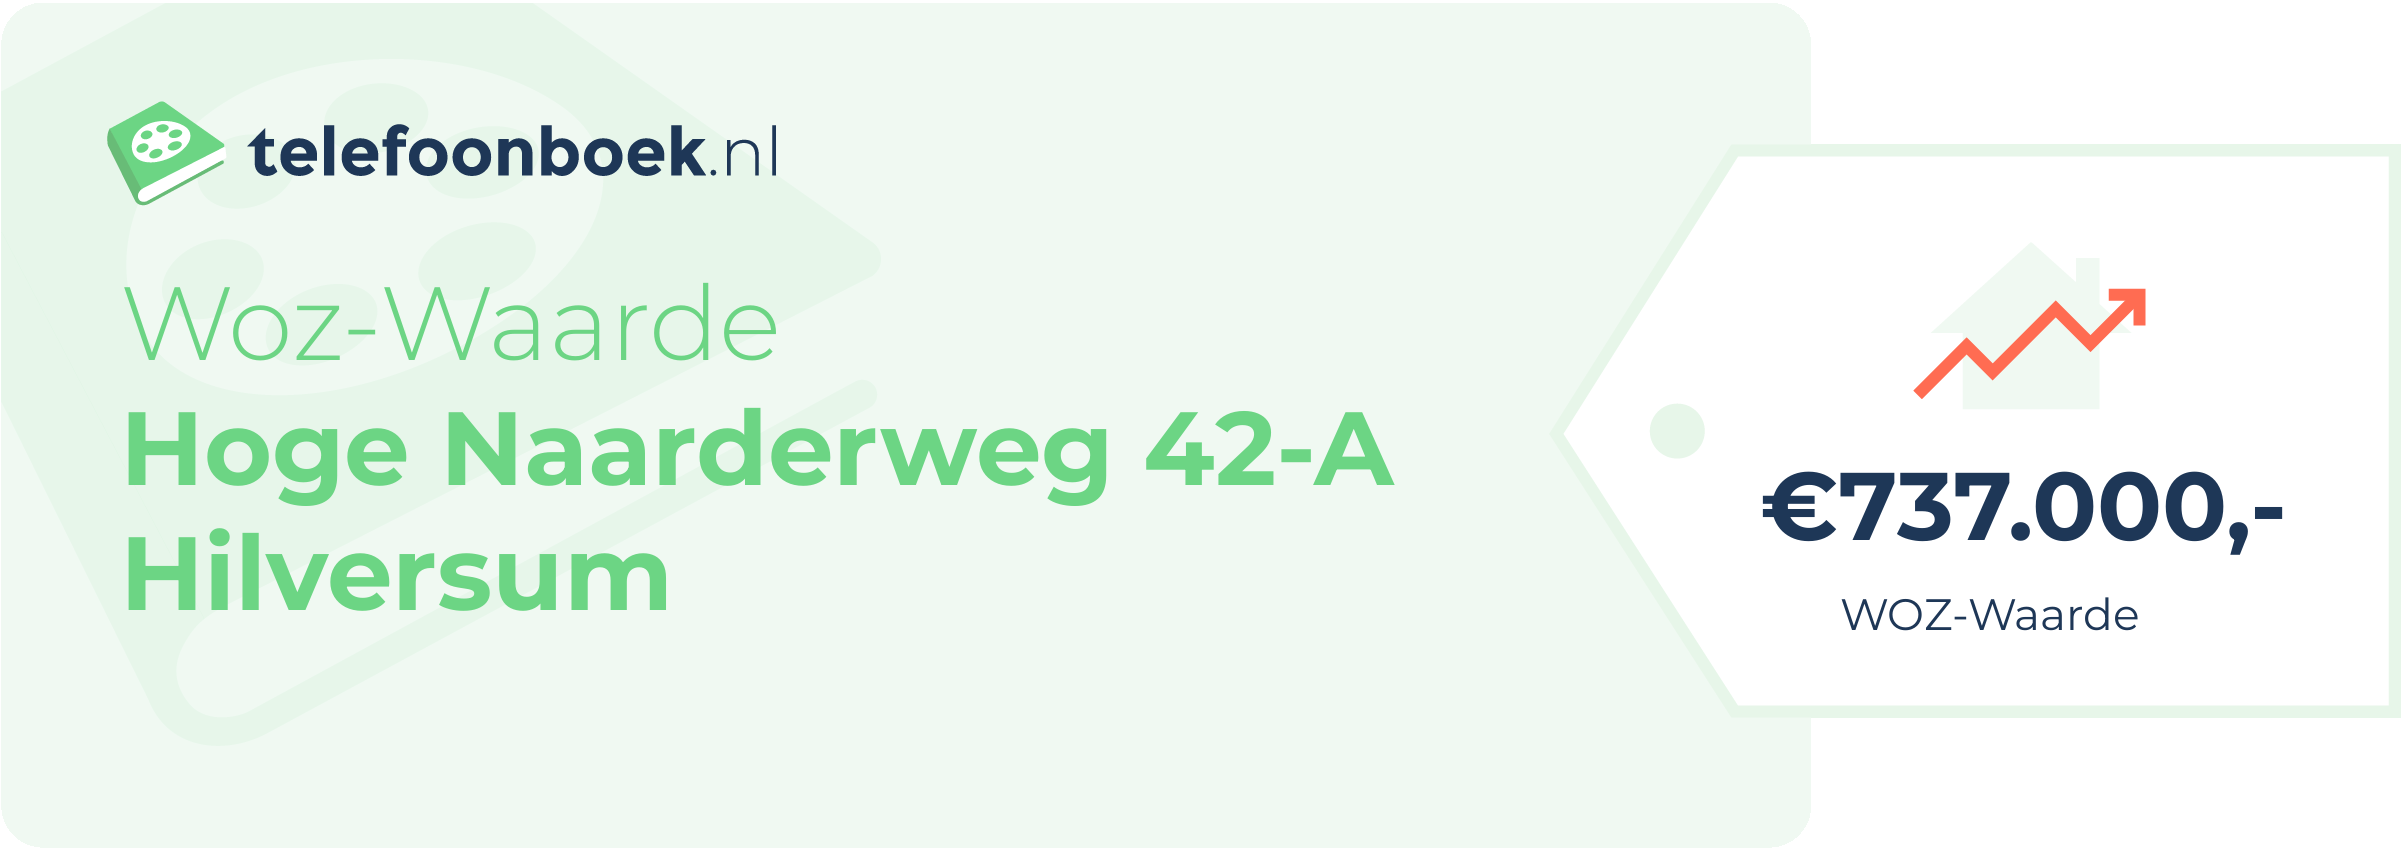 WOZ-waarde Hoge Naarderweg 42-A Hilversum